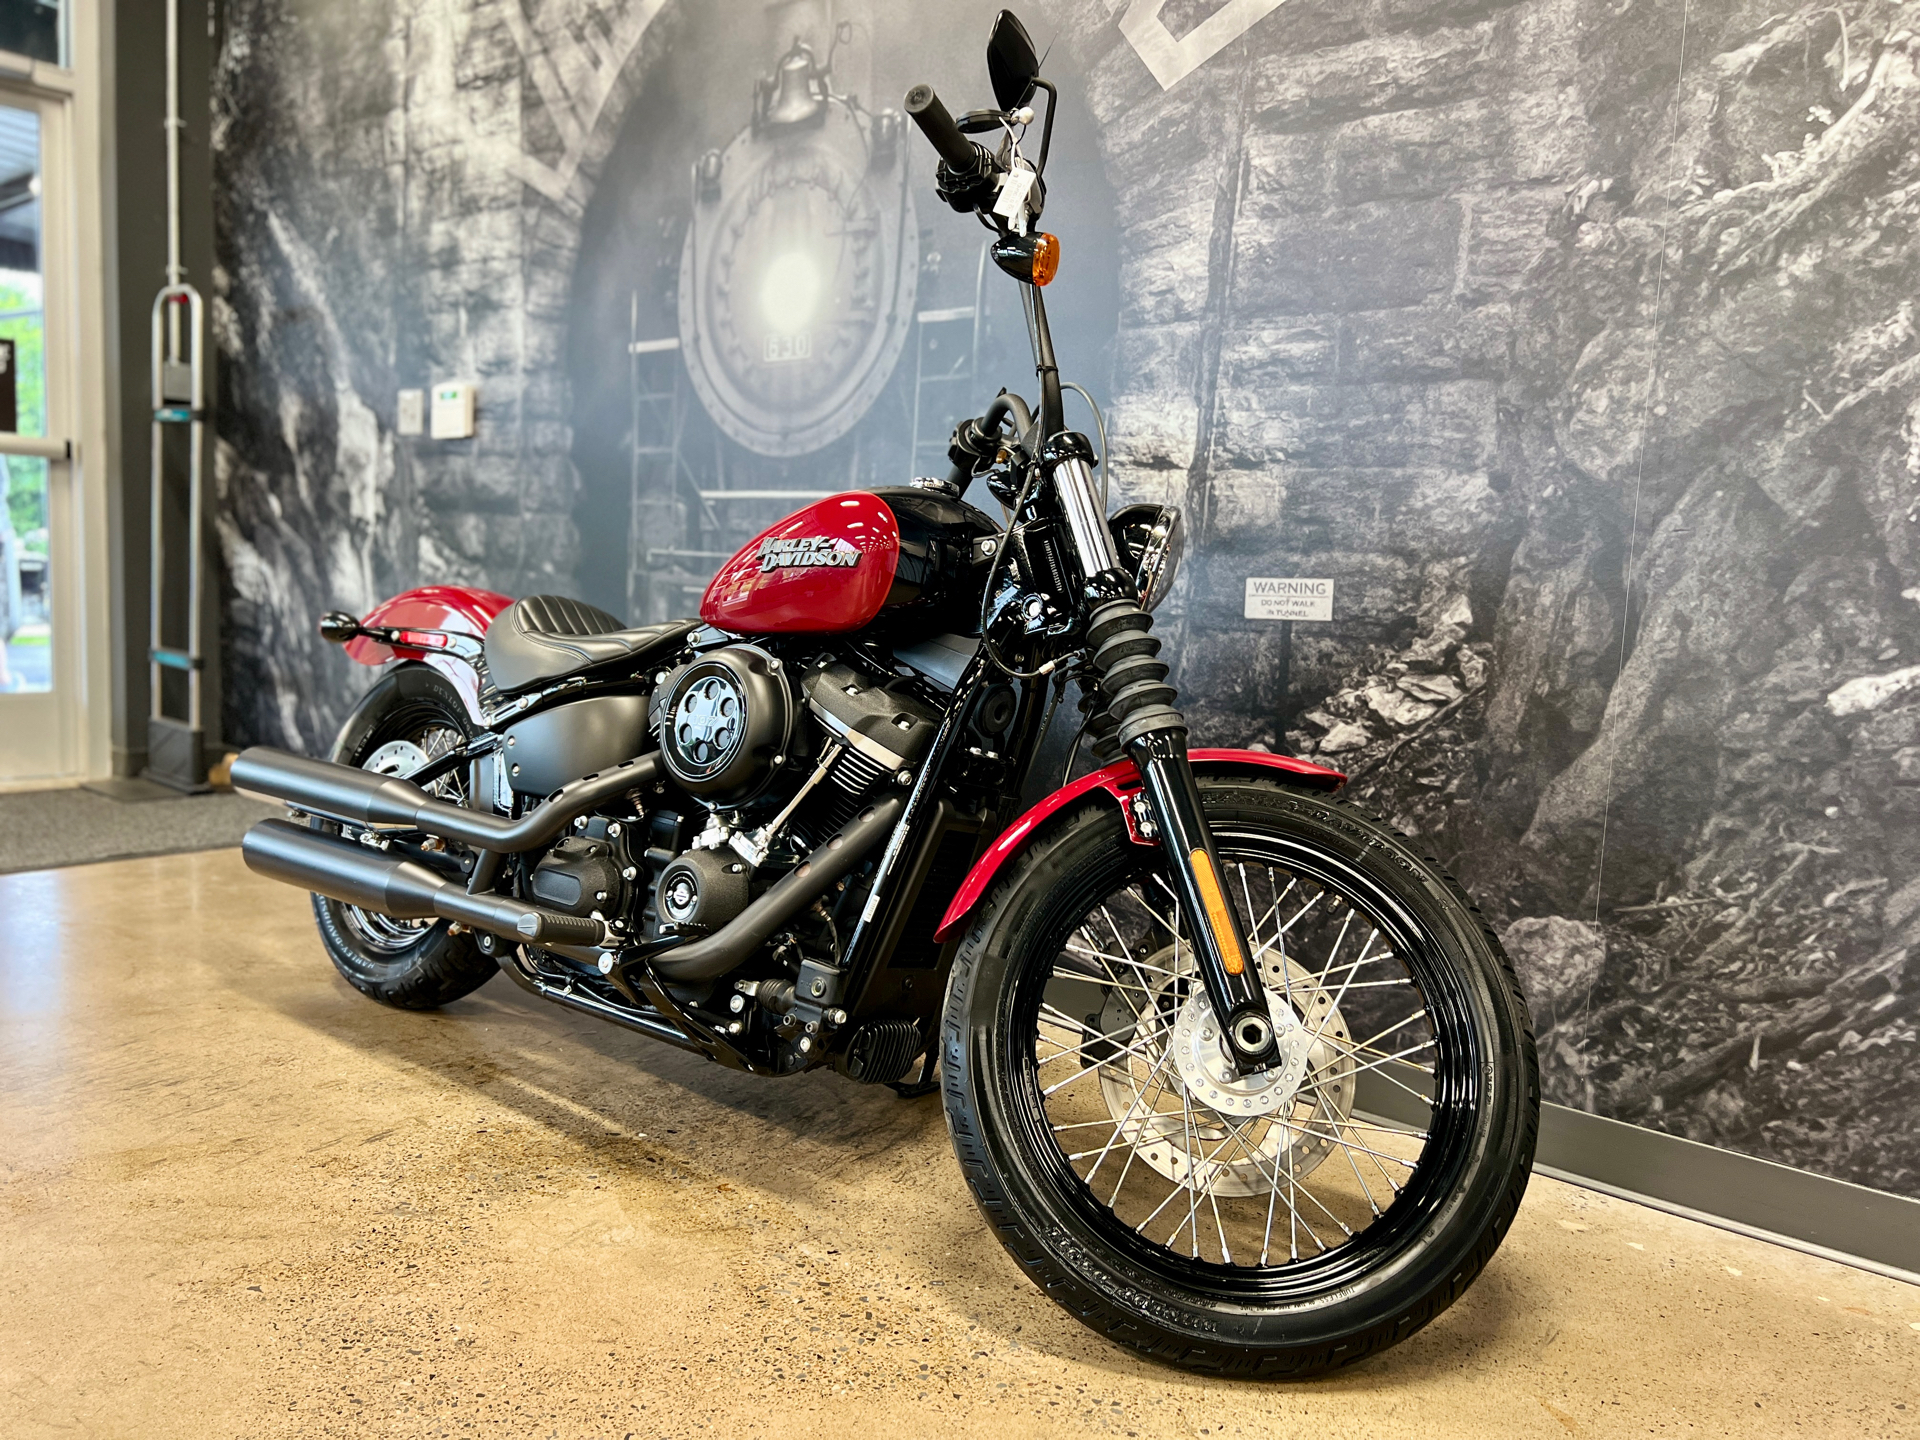 2020 Harley-Davidson Street Bob® in Duncansville, Pennsylvania - Photo 4